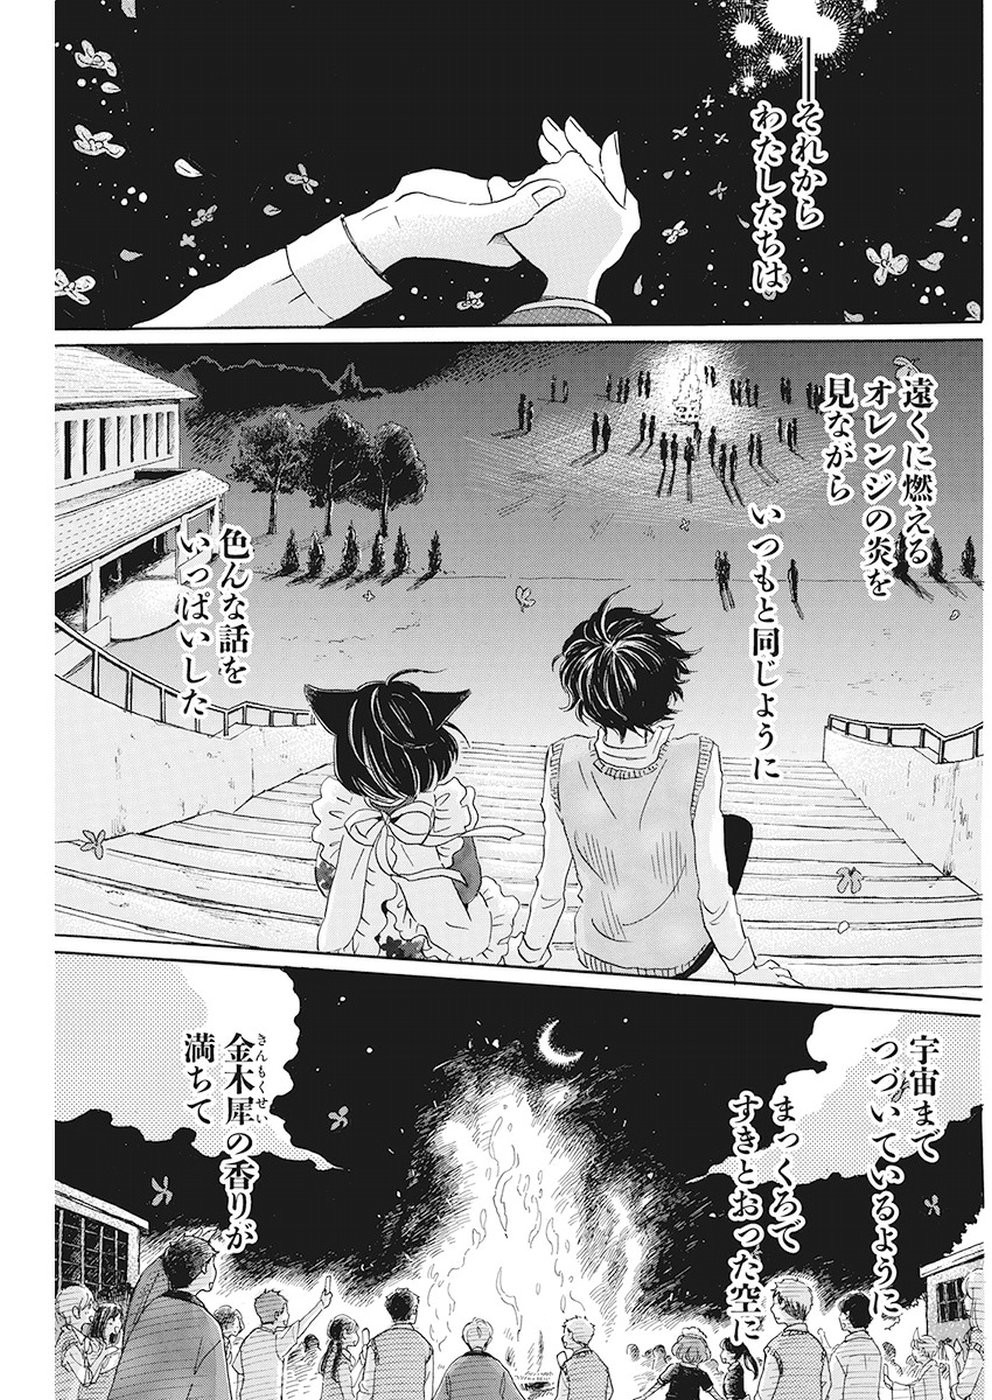 3 Gatsu no Lion - Chapter 155 - Page 11